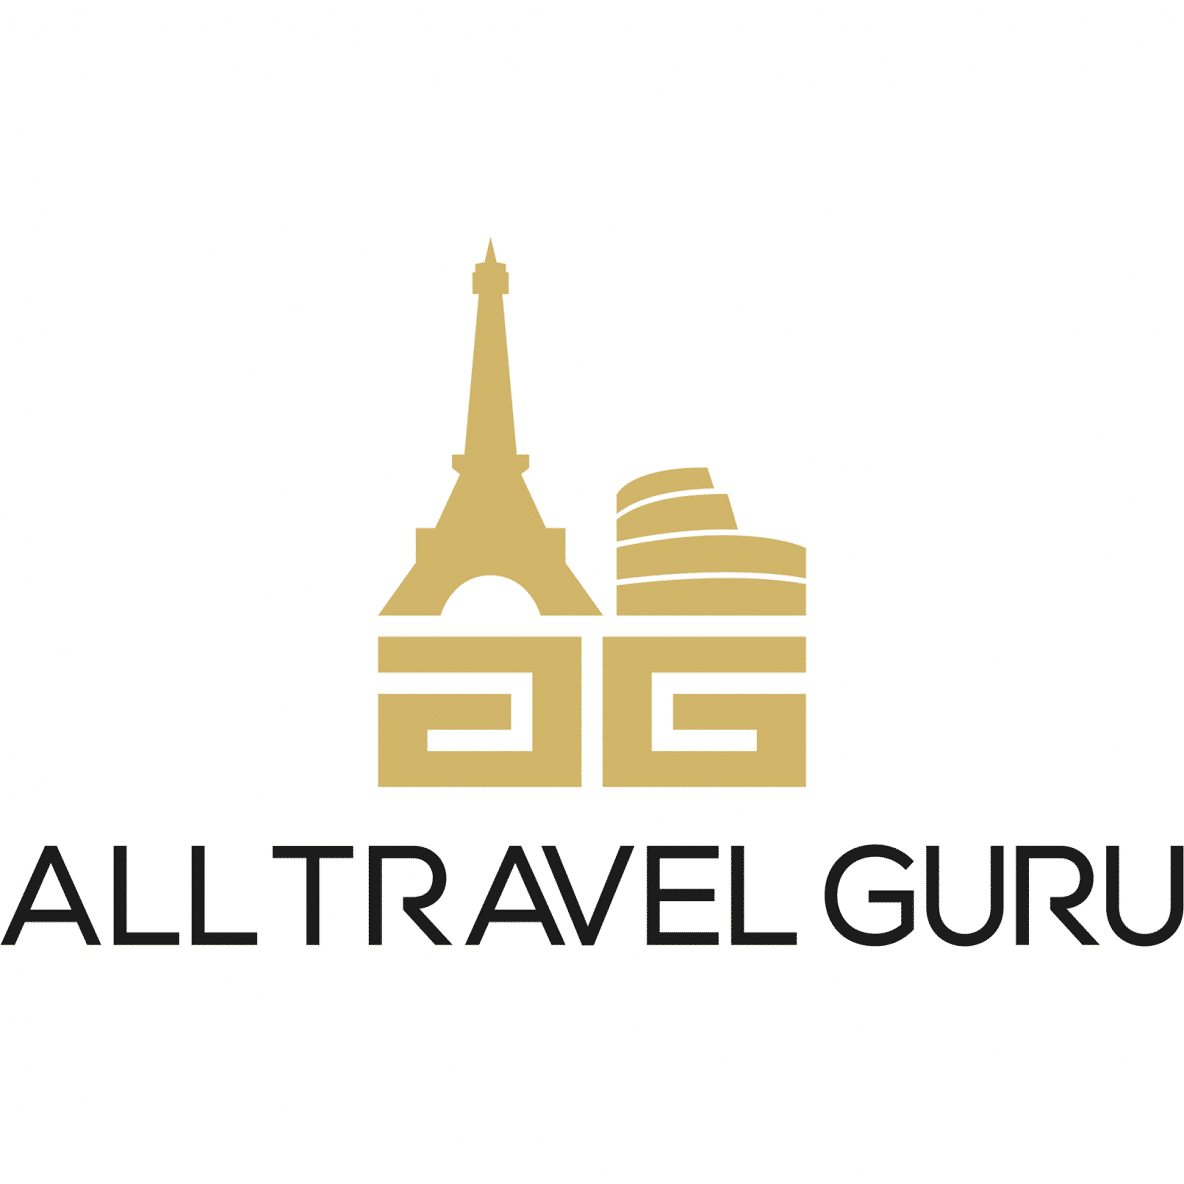 All Travel Guru Luxury Travel Agency Logo